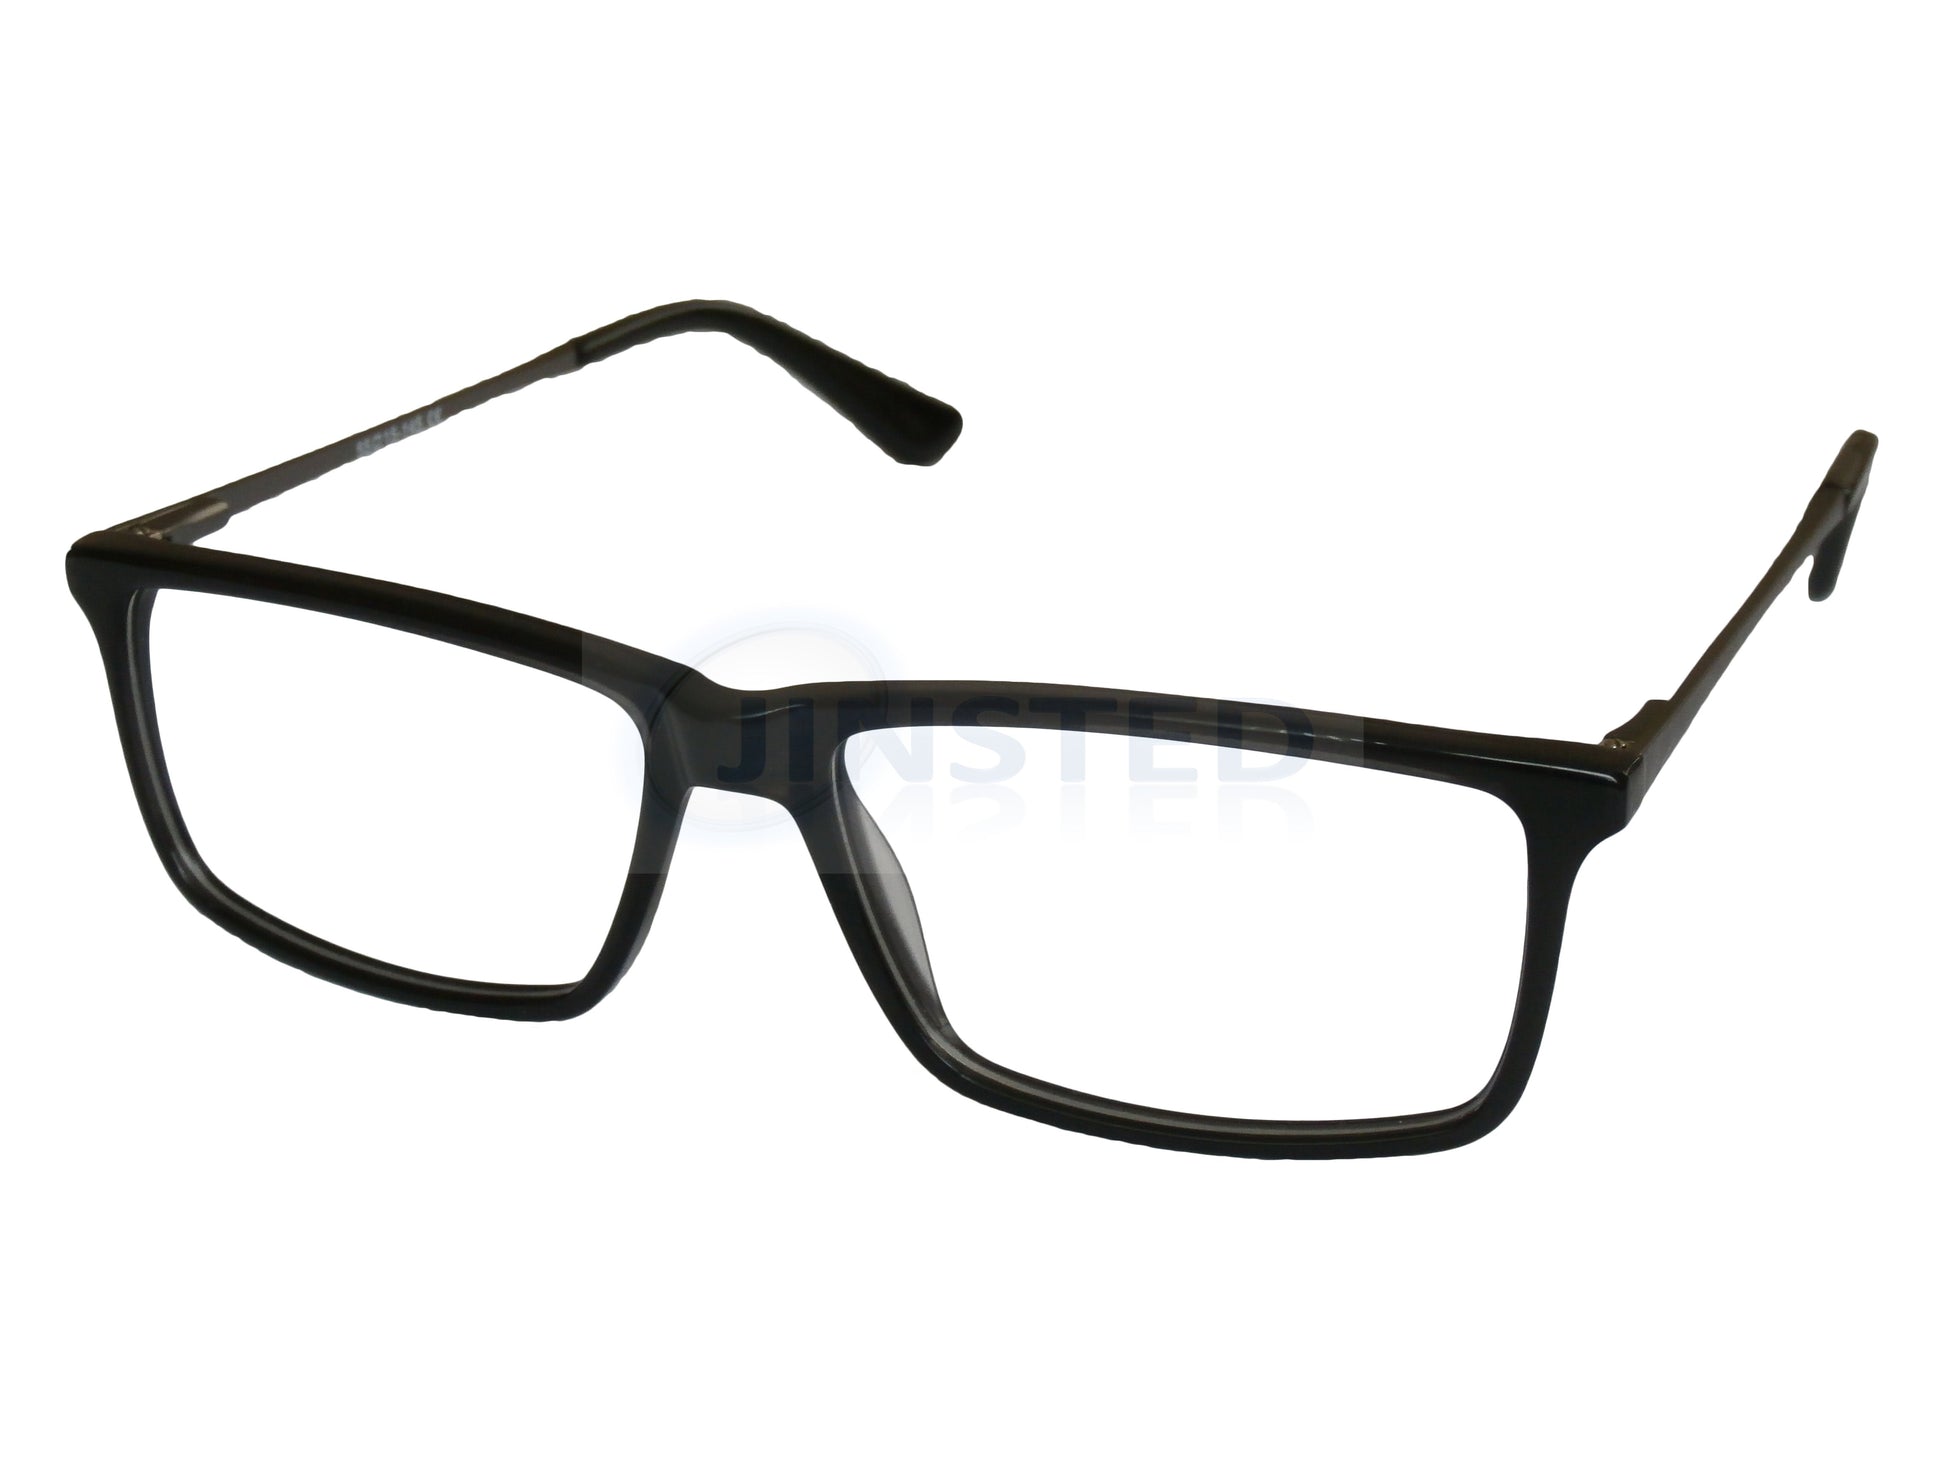 Glasses Frames, Luxury High Quality Black Swiss Designed Glasses Frames, Jinsted